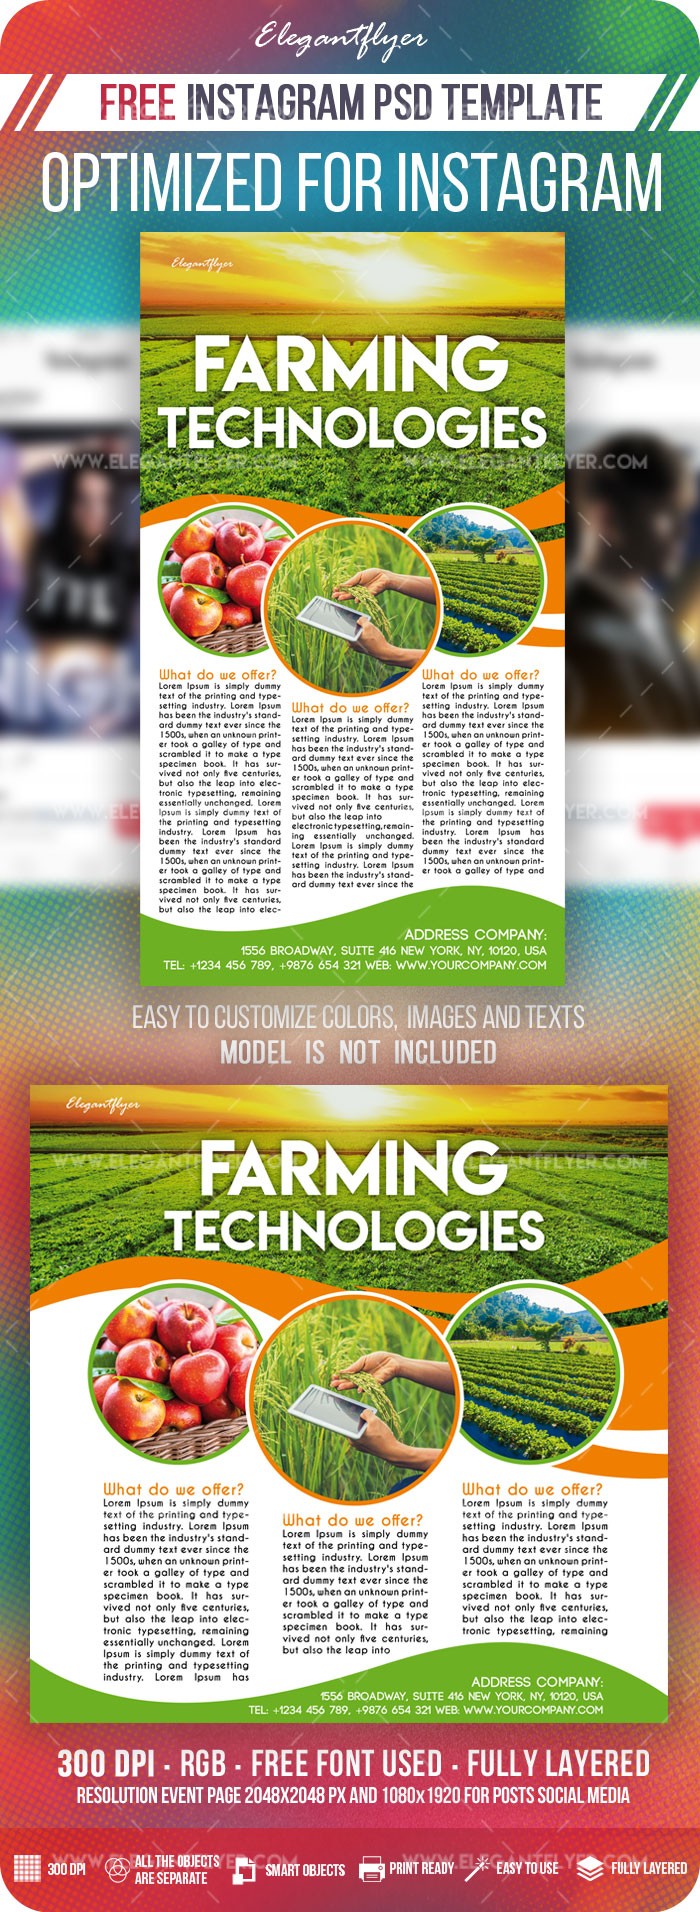 Farming Technologies Instagram would be translated as "Instagram de Technologies Agricoles" in French. by ElegantFlyer